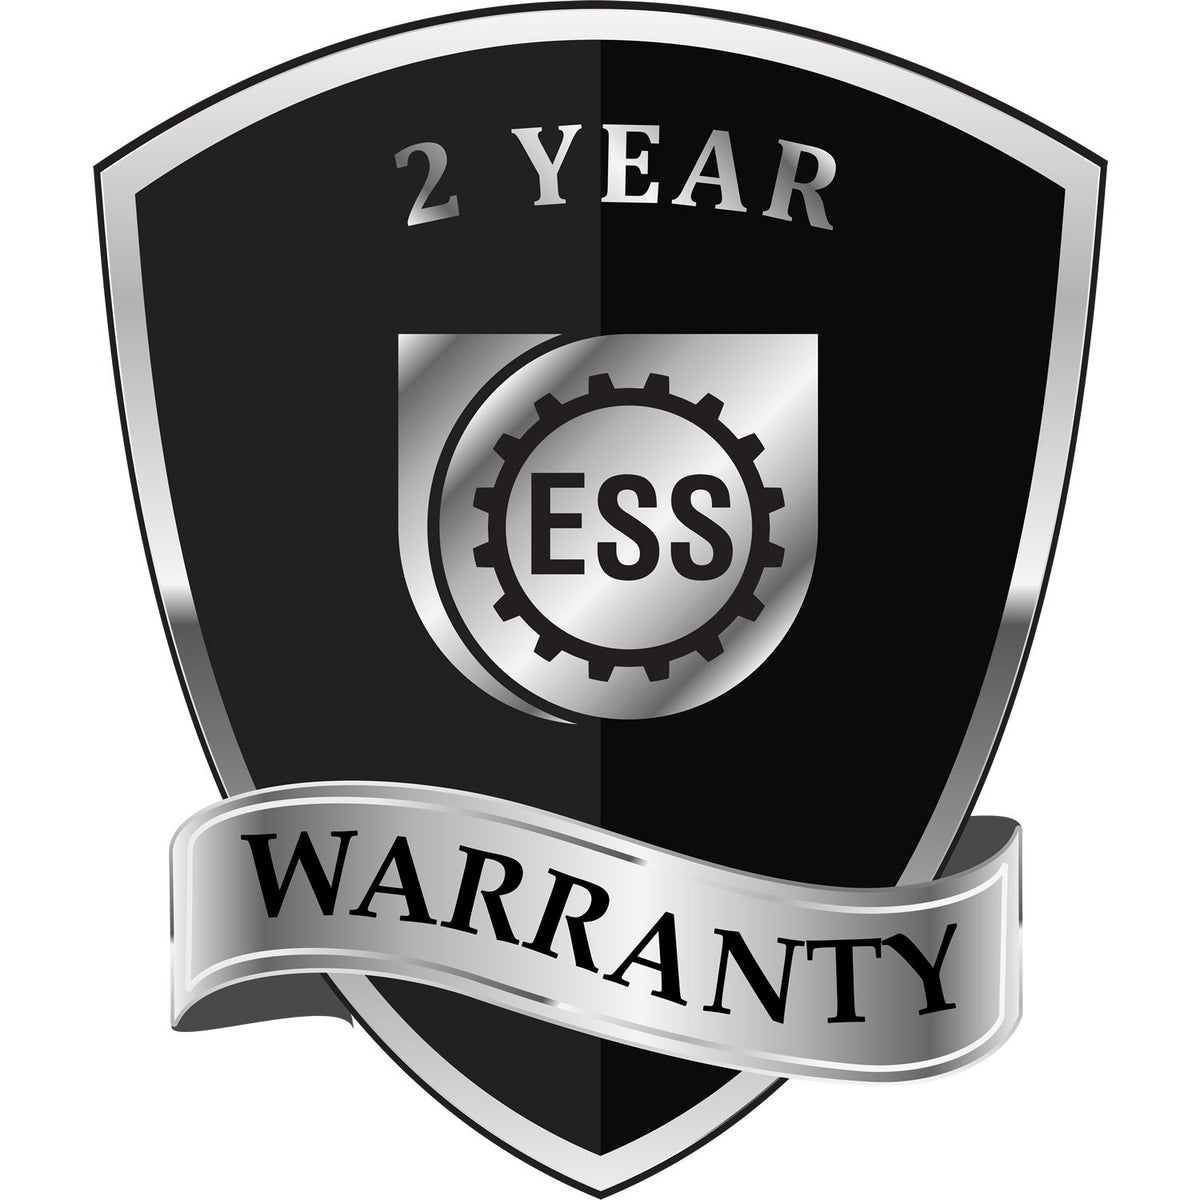 A black and silver badge or emblem showing warranty information for the Hybrid Florida Land Surveyor Seal